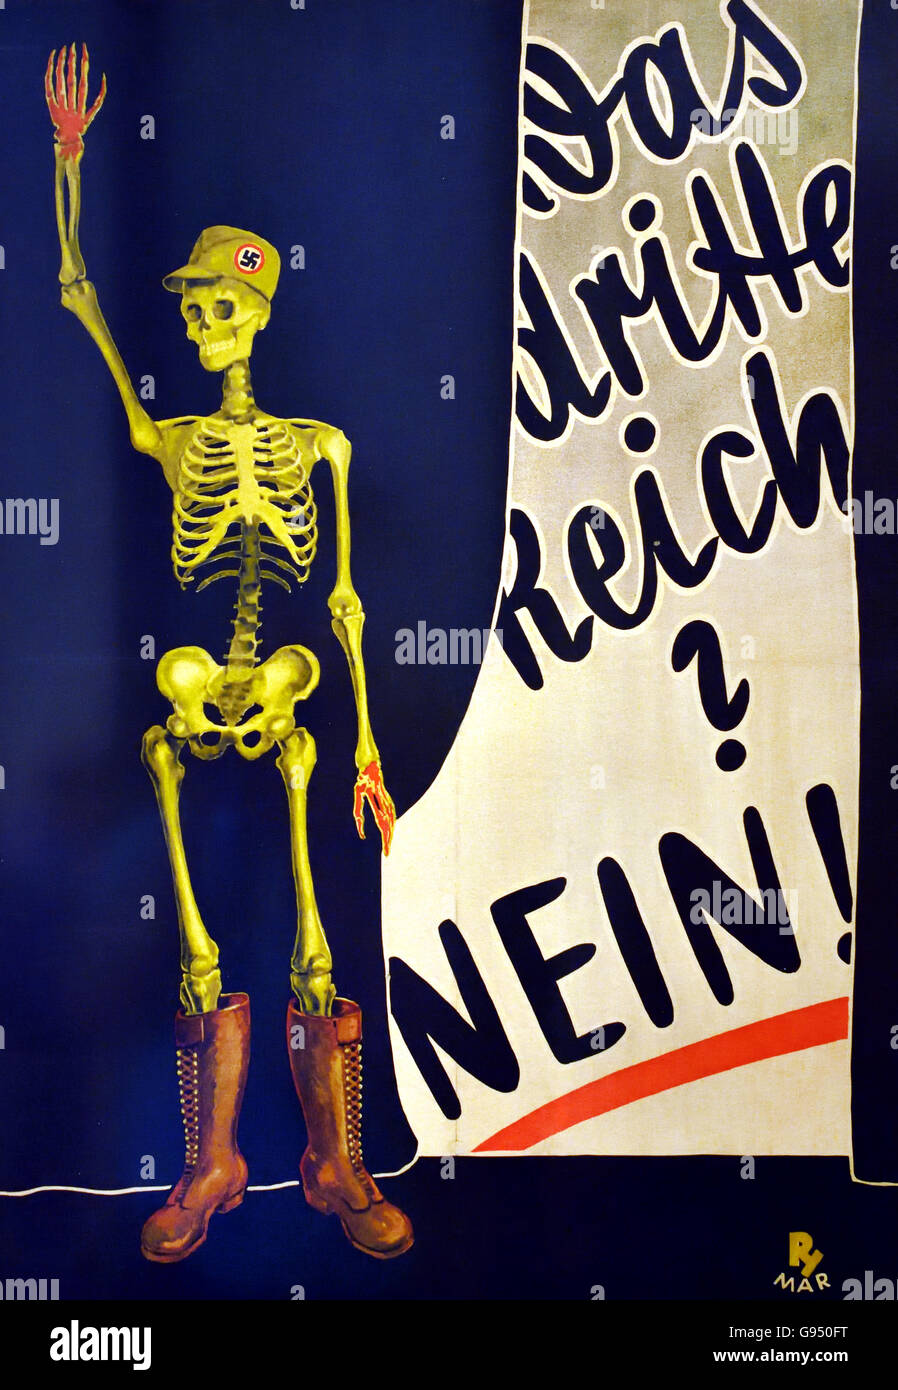 SPD Plakat mit Warnung vor dem Nationalsozialismus - SPD poster warning against Nazism - National Socialism. 1932  Berlin Nazi Germany Stock Photo